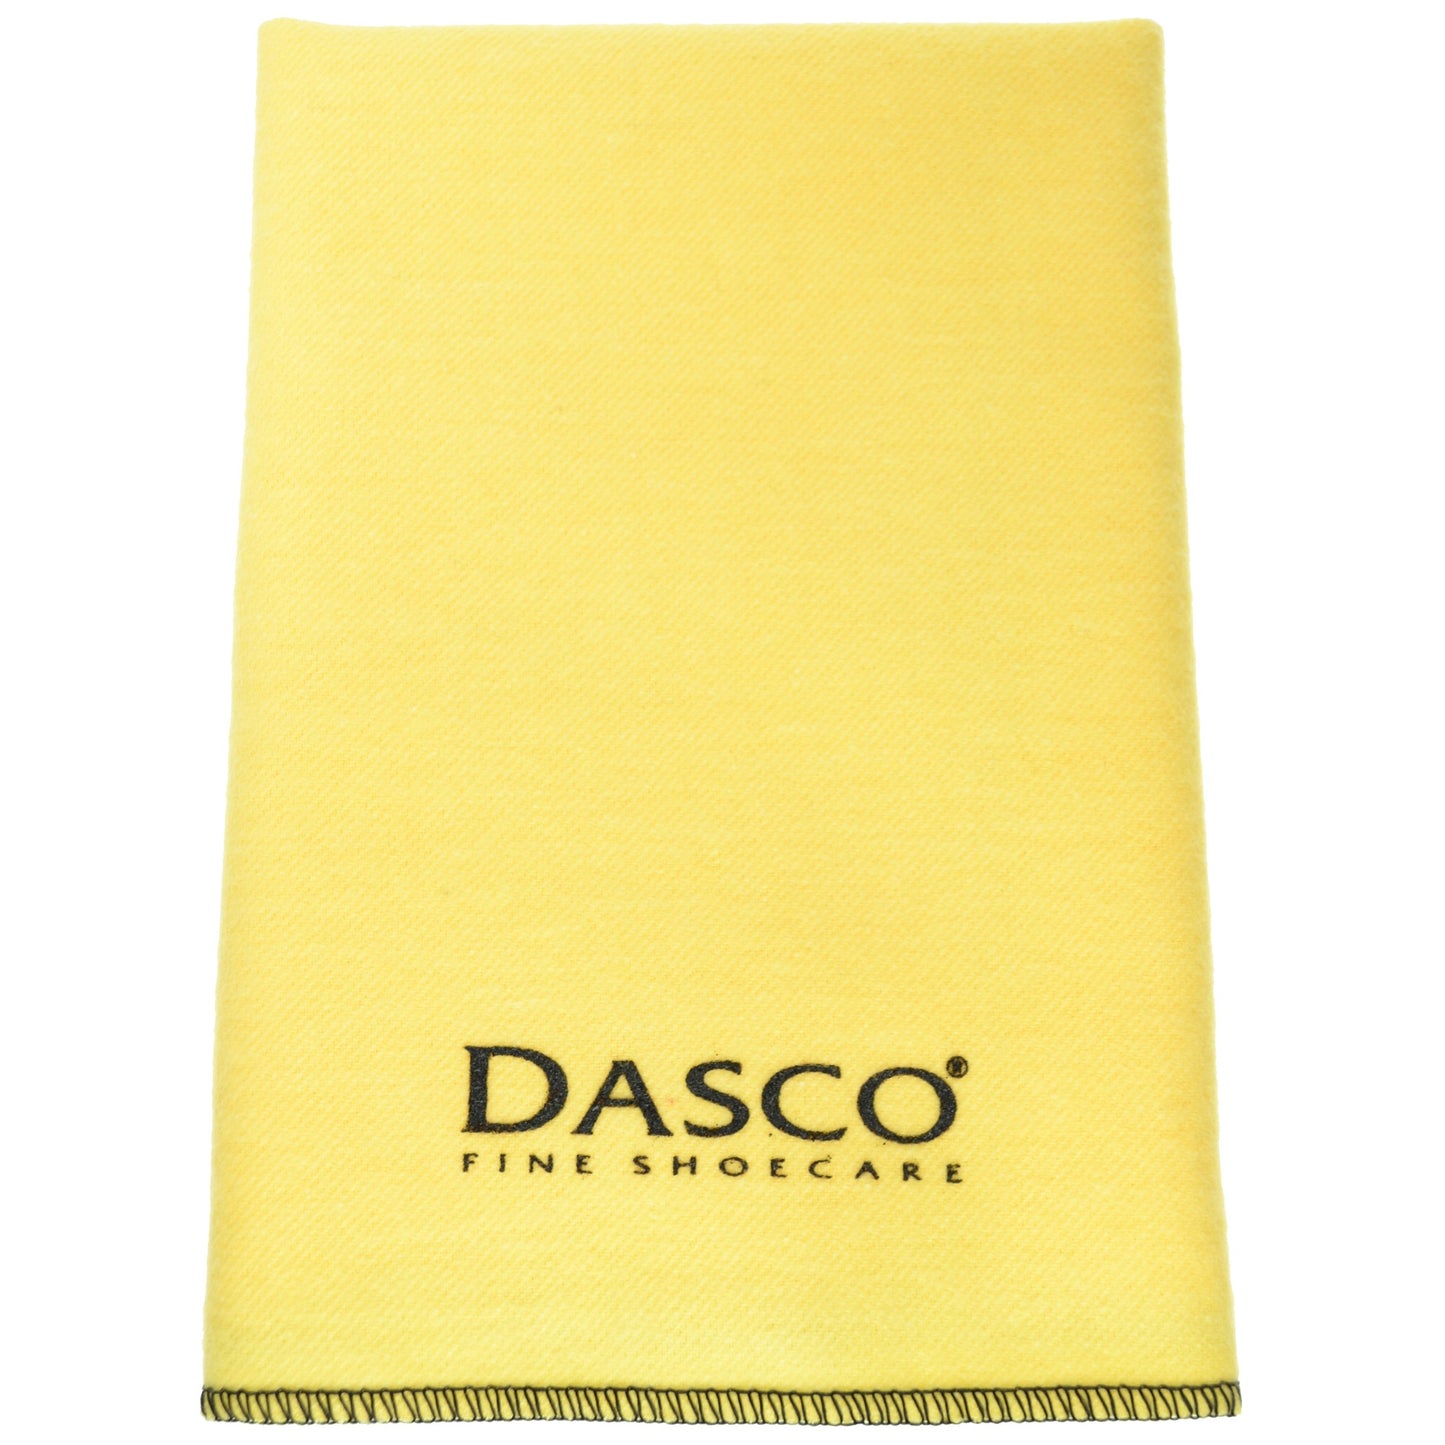 Dasco Shoe Polish Cloth - Large and Thick